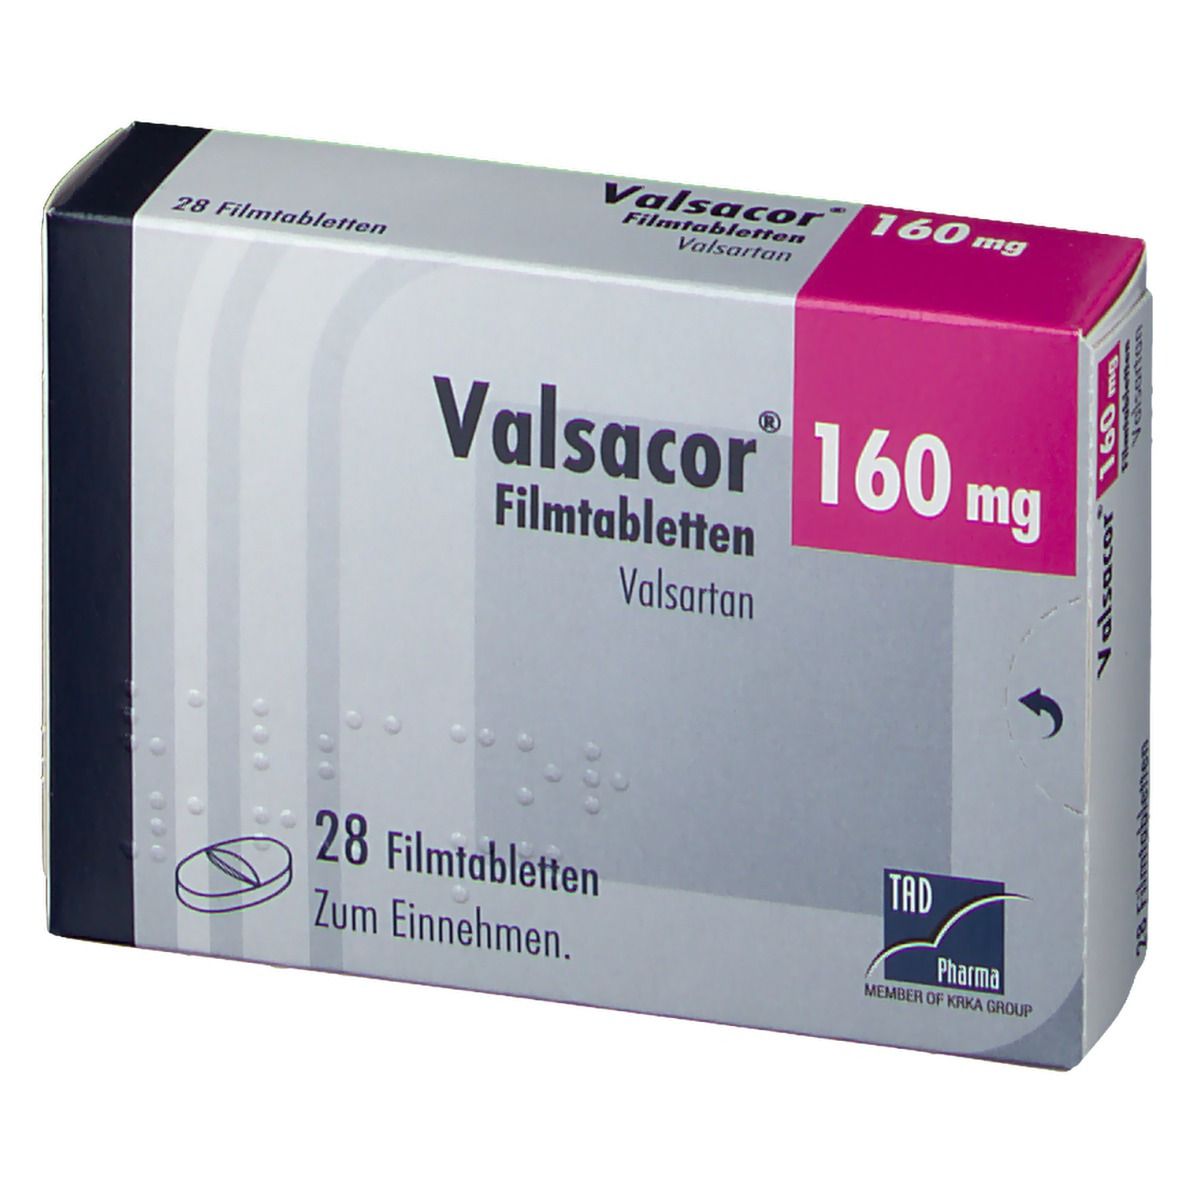 Valsacor® 160 mg